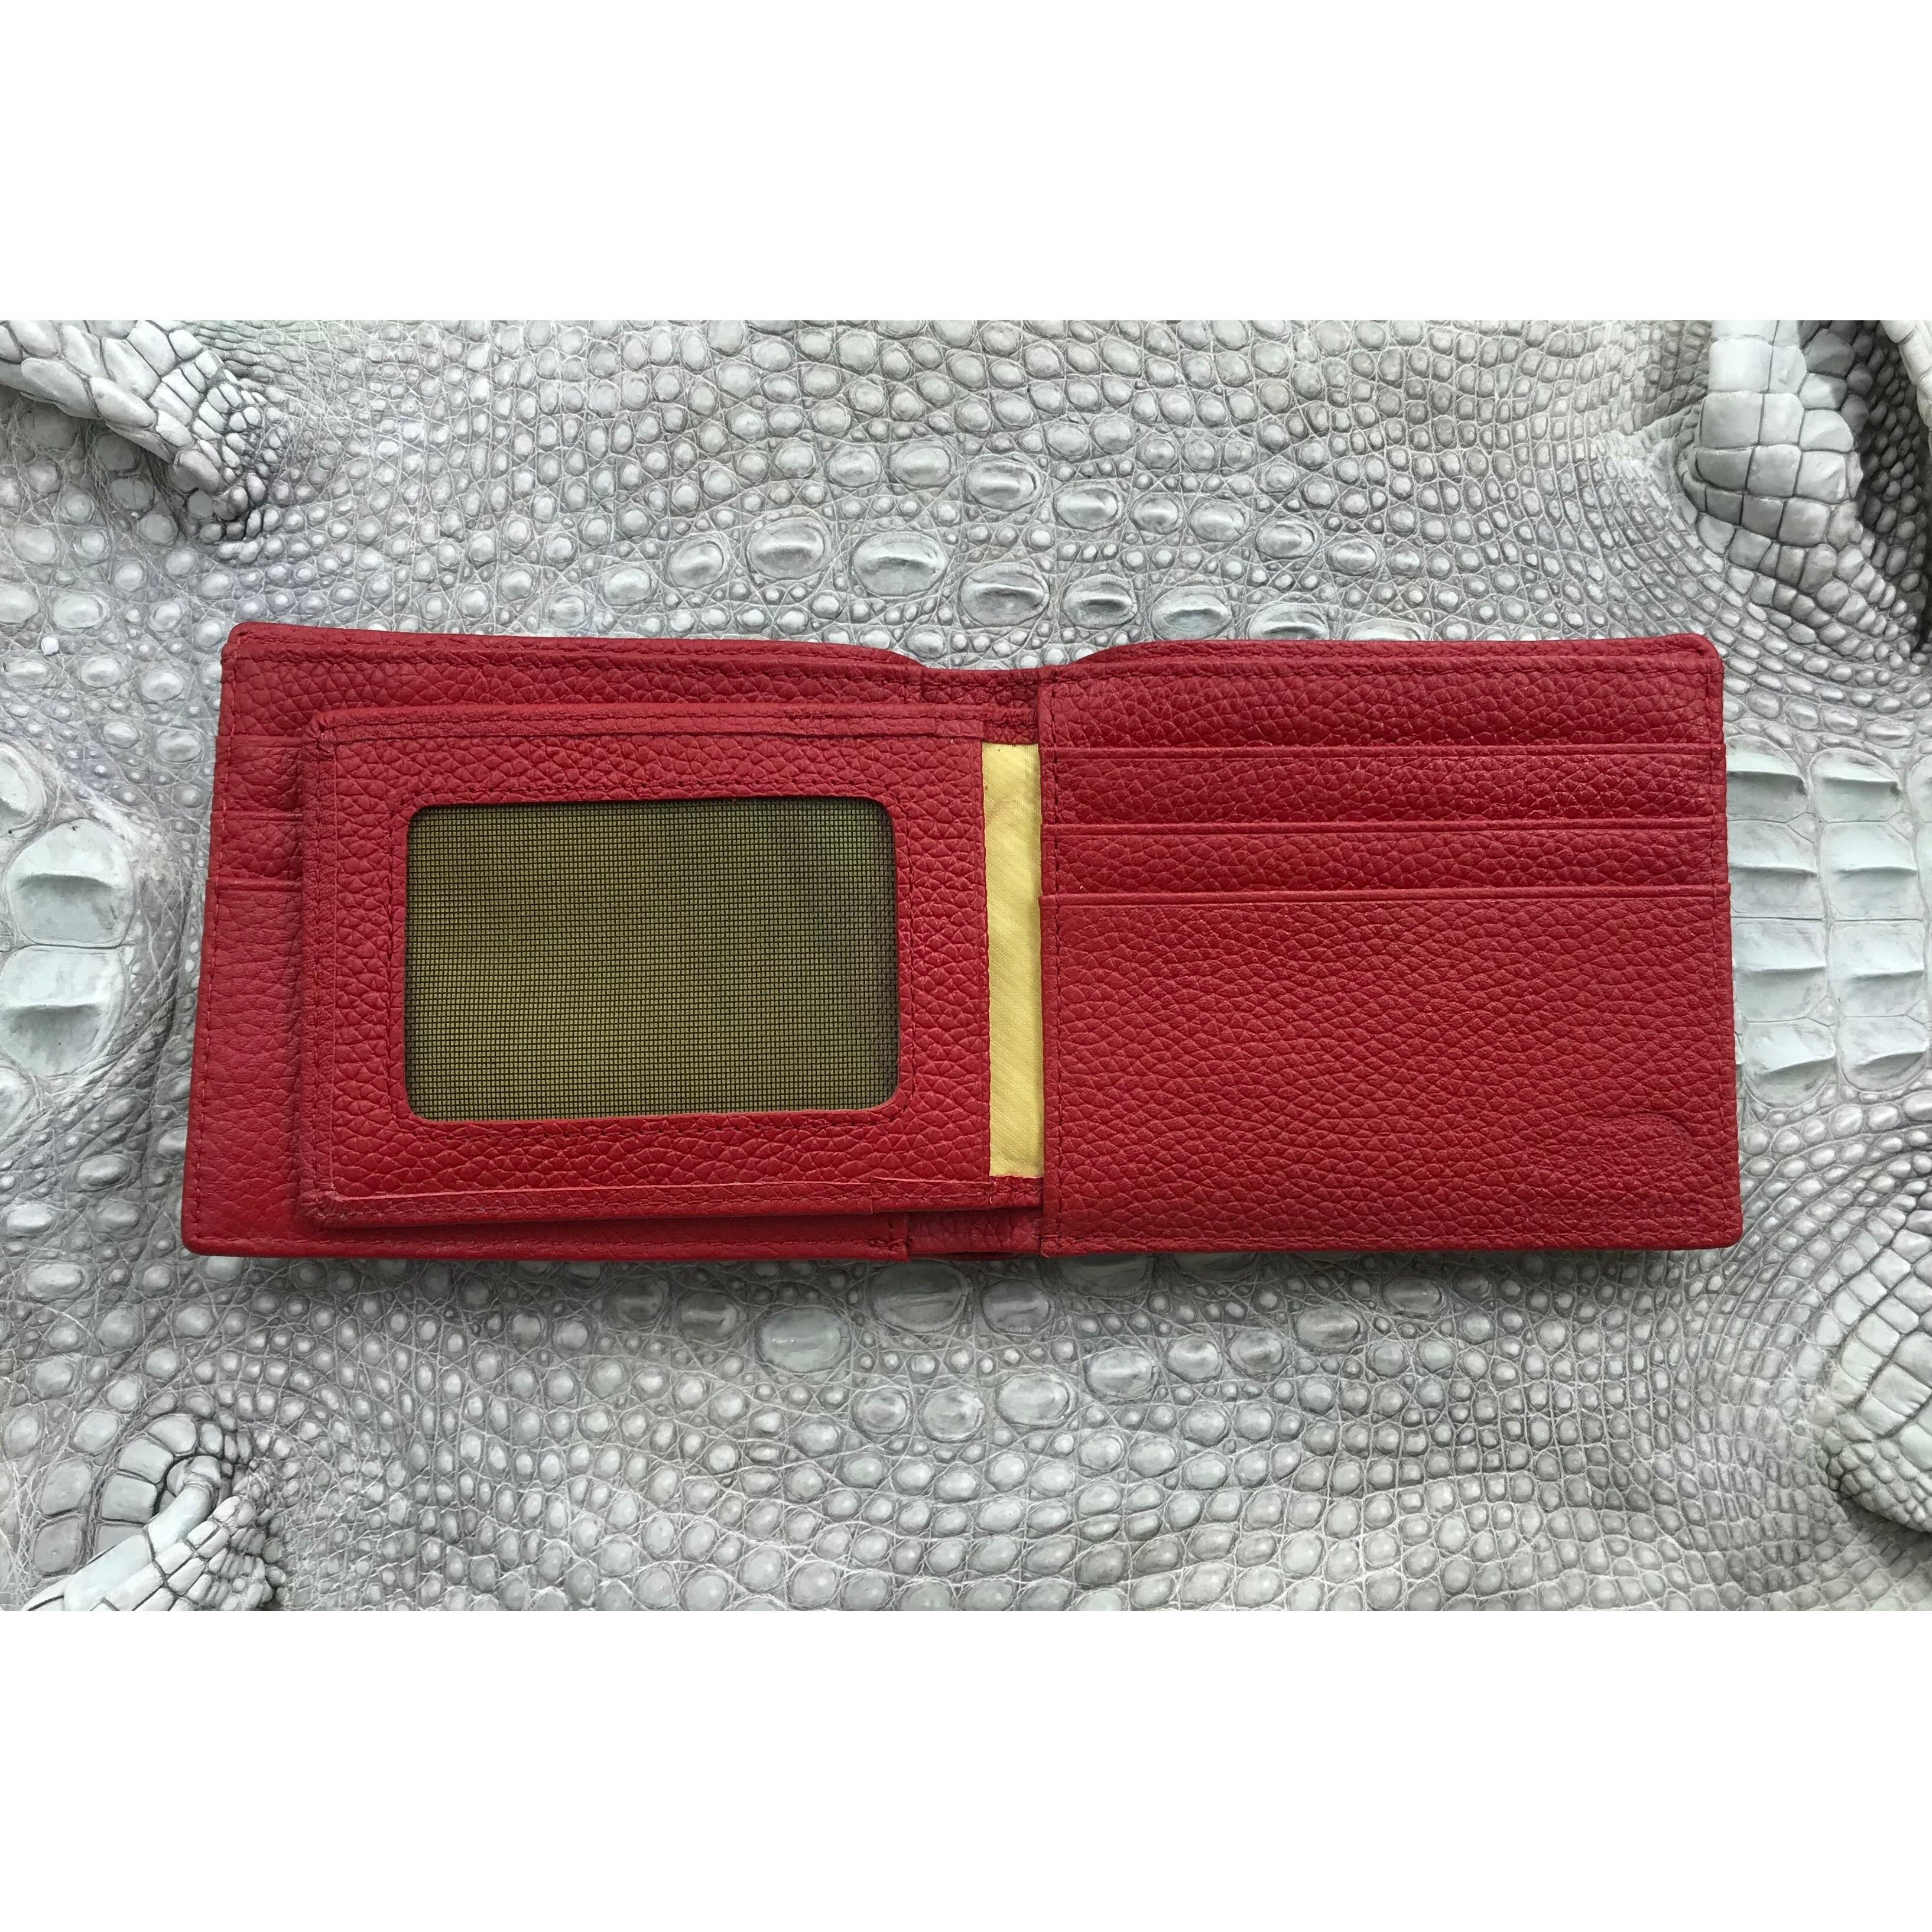 Red Burgundy Alligator Skin Bifold Wallet For Men | Handmade Crocodile Leather Wallet RFID Blocking | VL4541 - Vinacreations